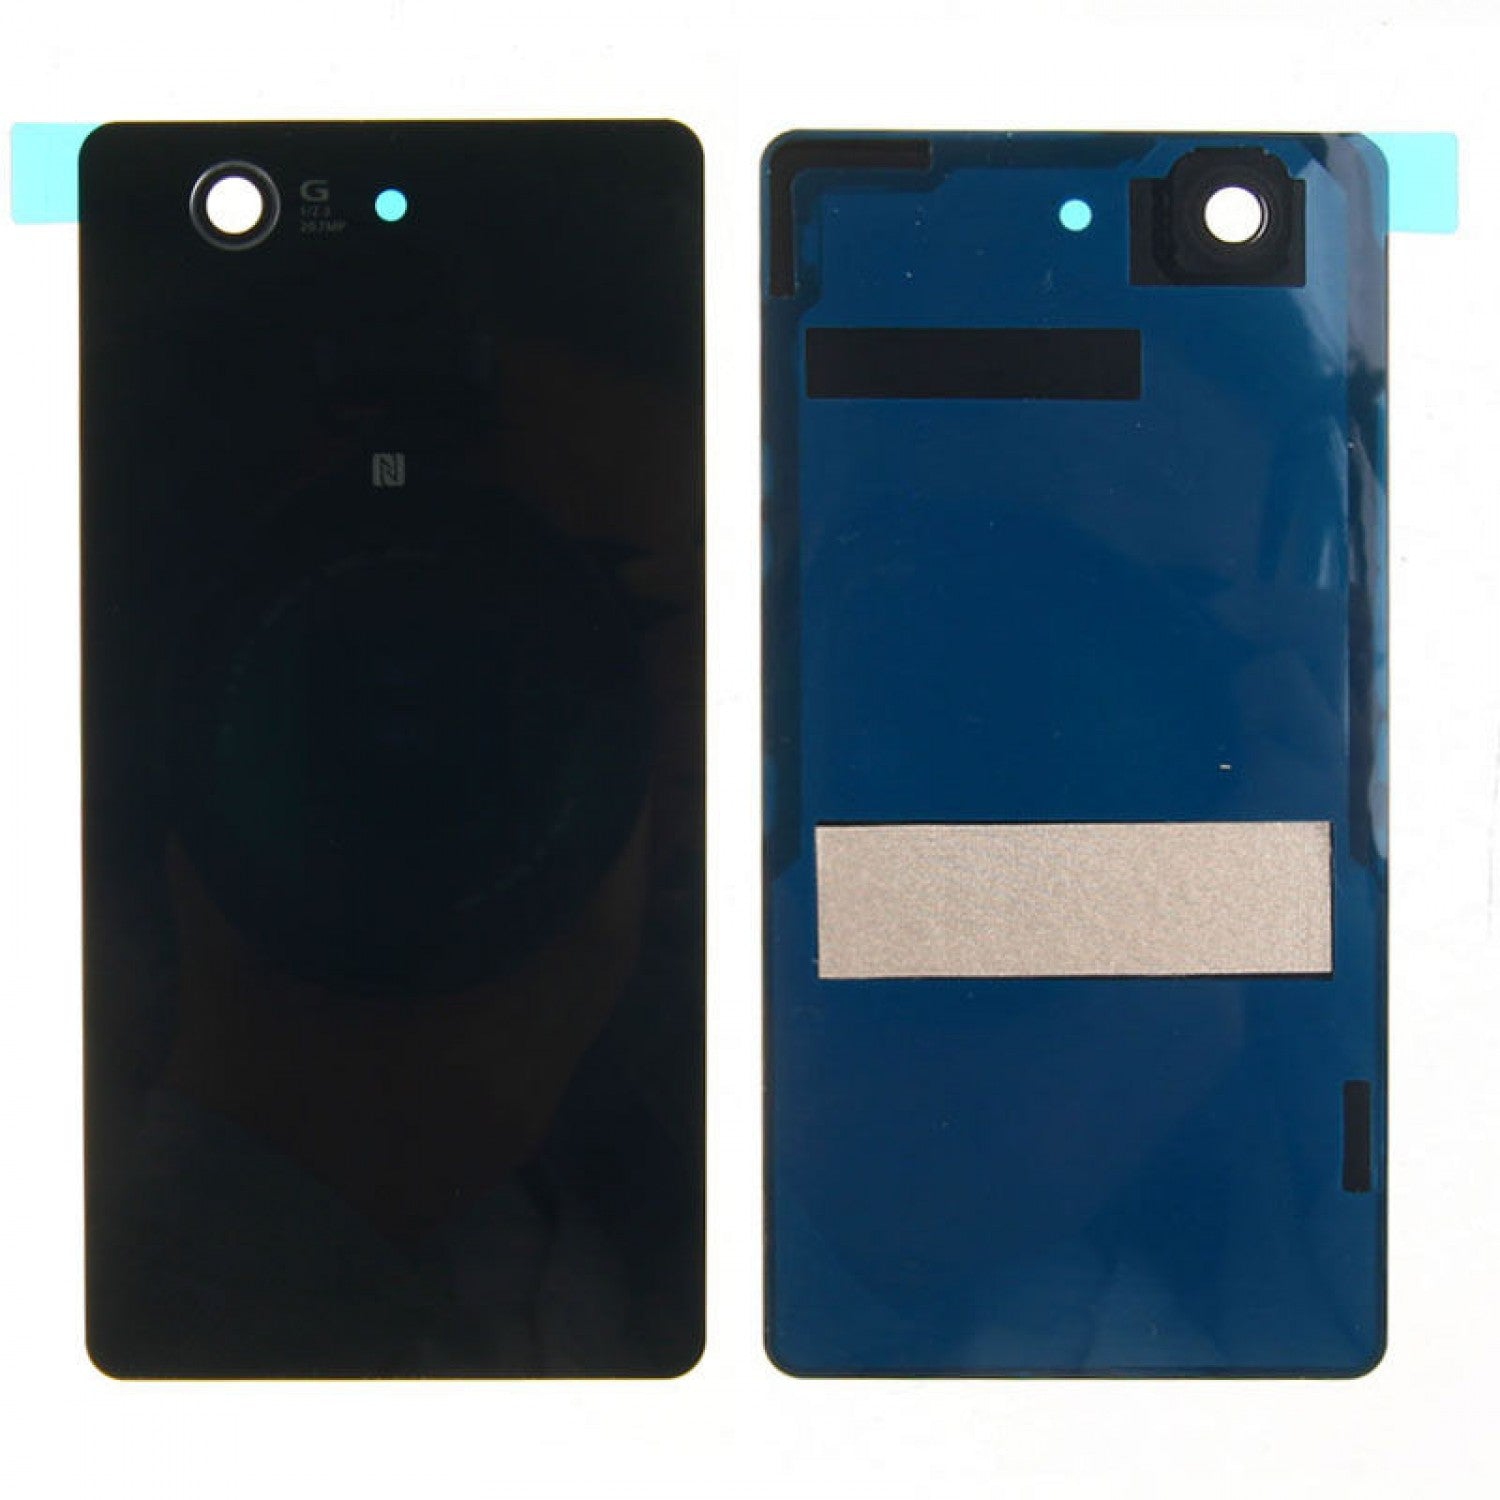 Back Battery Cover For Xperia Z3 L55T D6603 D6643 D6653 [Pro-Mobile]